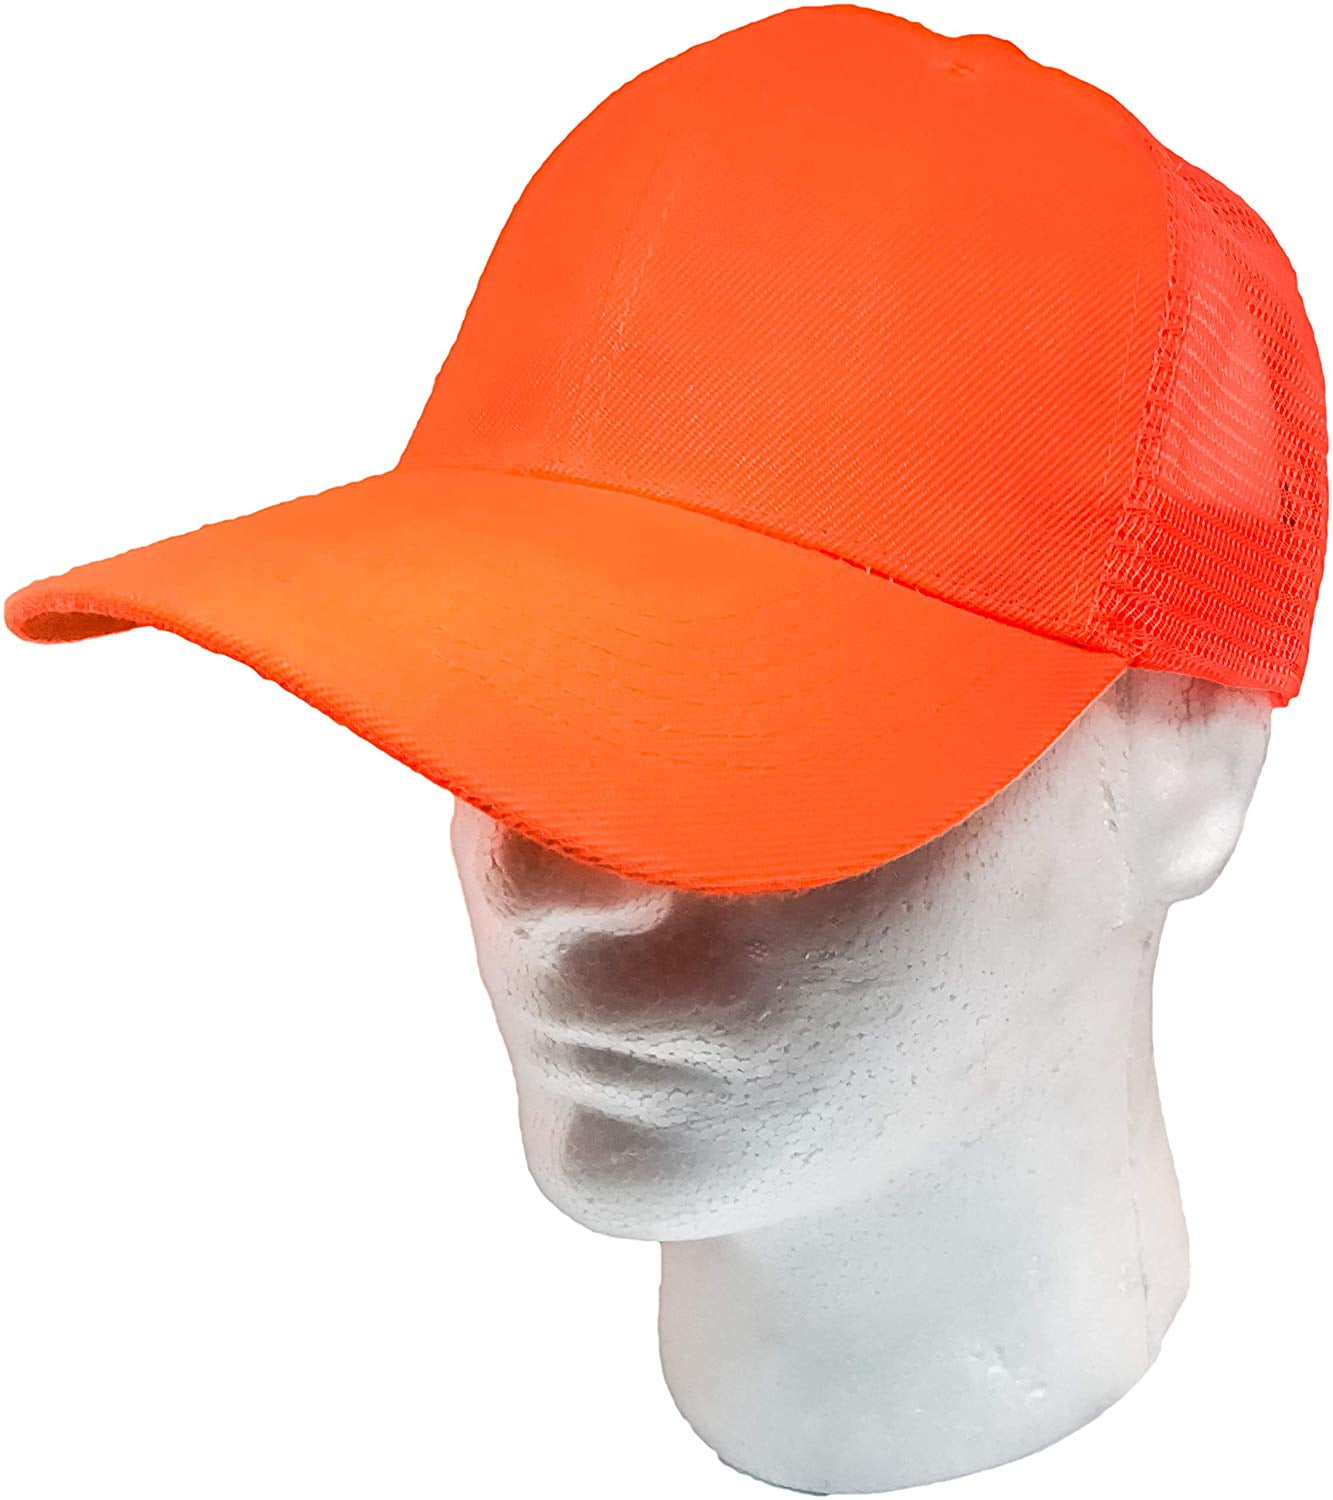 Adjustable Hat) Mesh Hunting Orange Back Brand Baseball Visual Black Cap (1 Bright Duck Safety